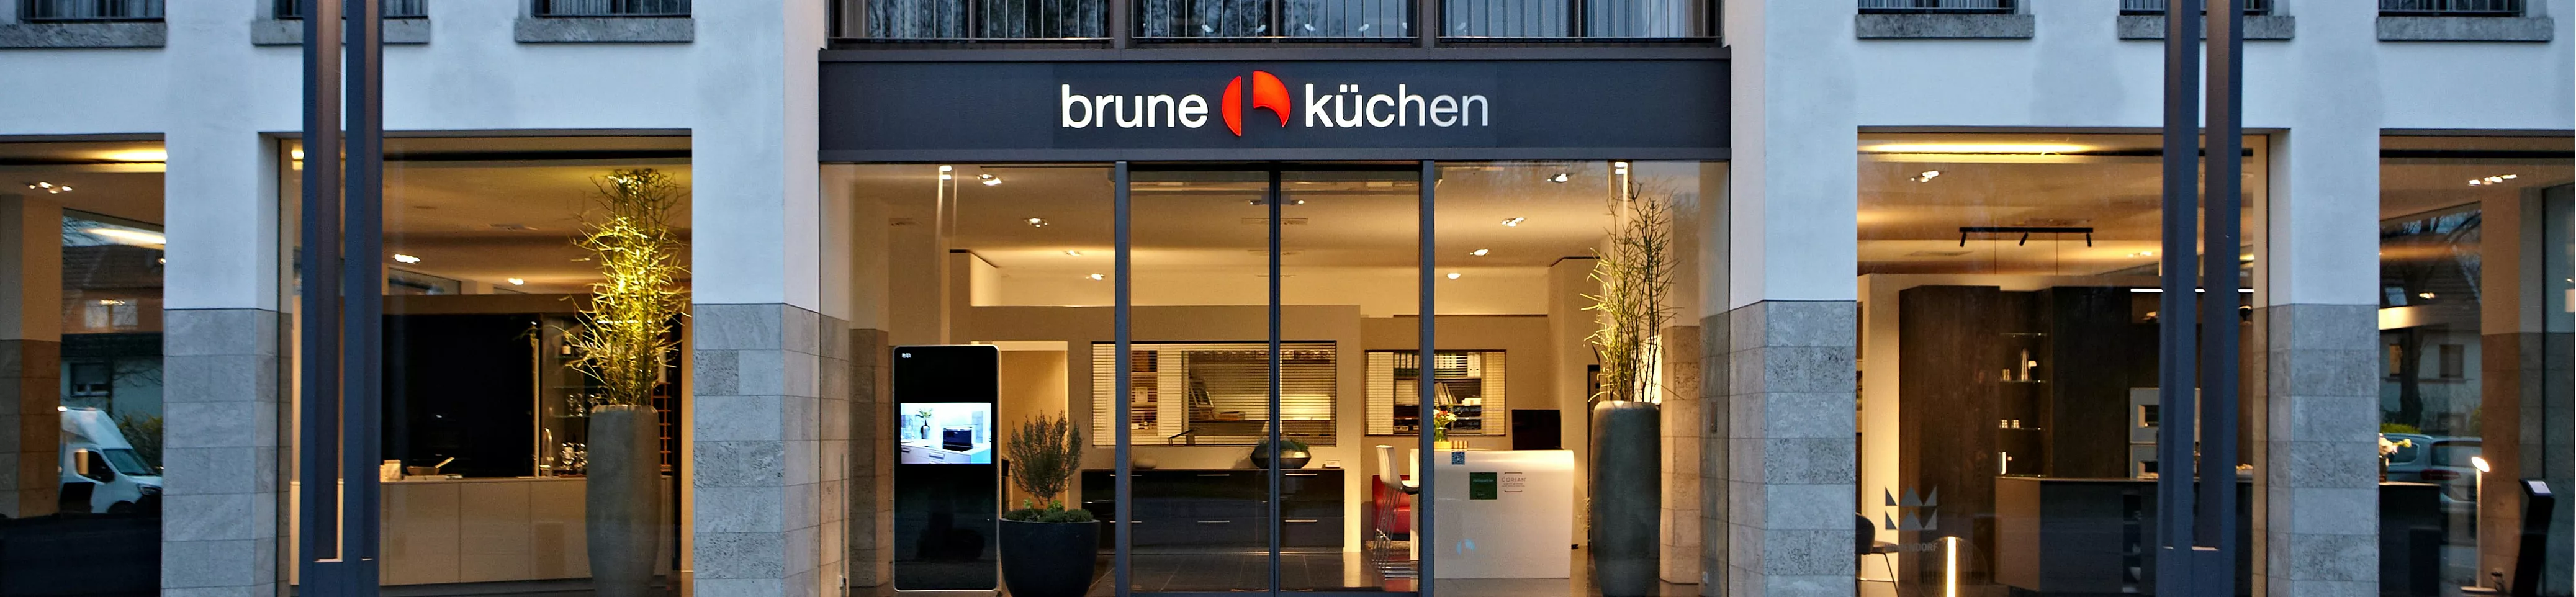 brune-kuechen-ohg-top-banner